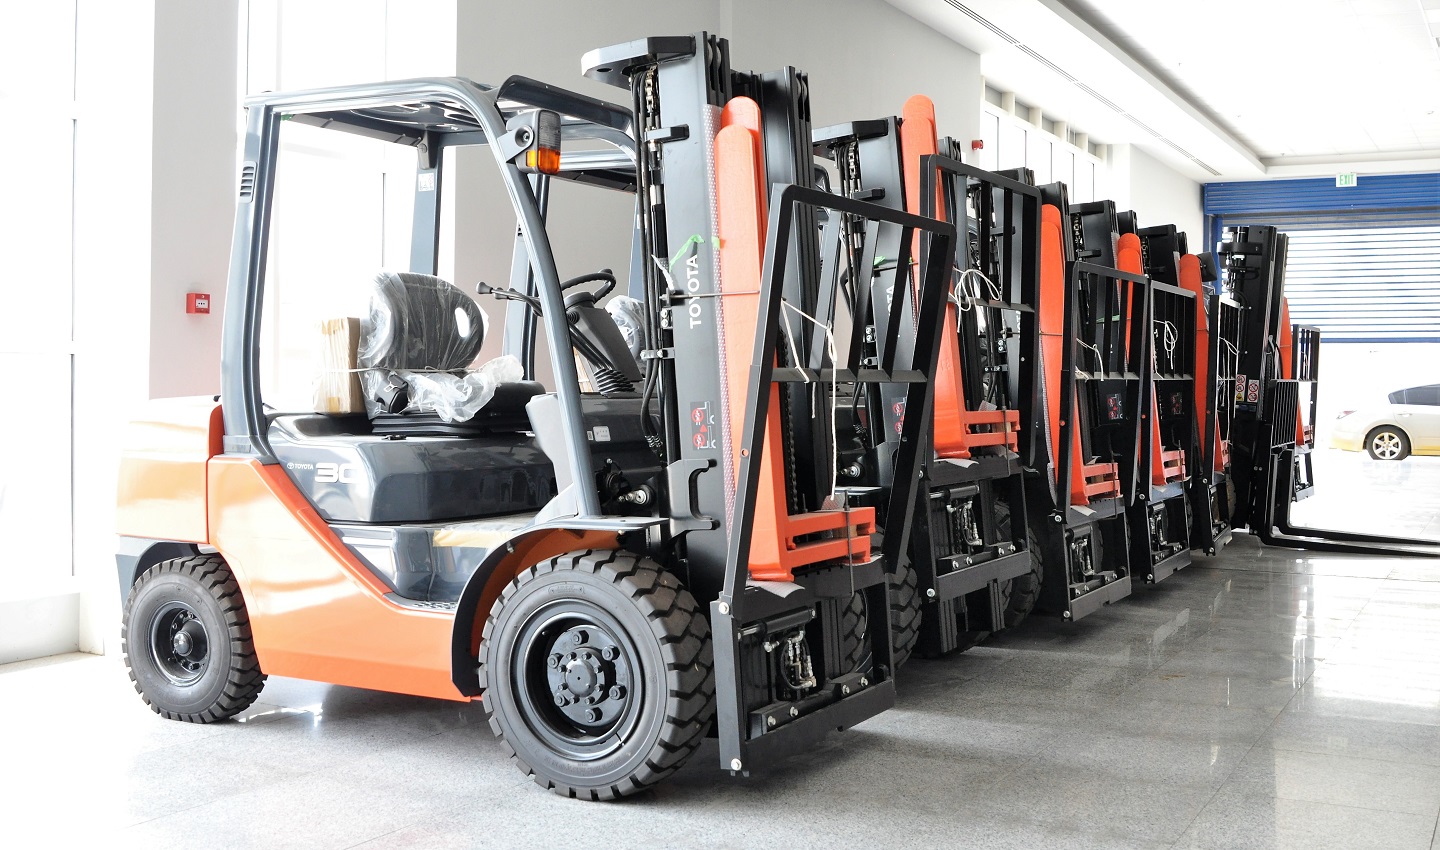 AAB Warehouse Solutions, Rental and Trading Equipment Qatar, Forklift Rental in Qatar